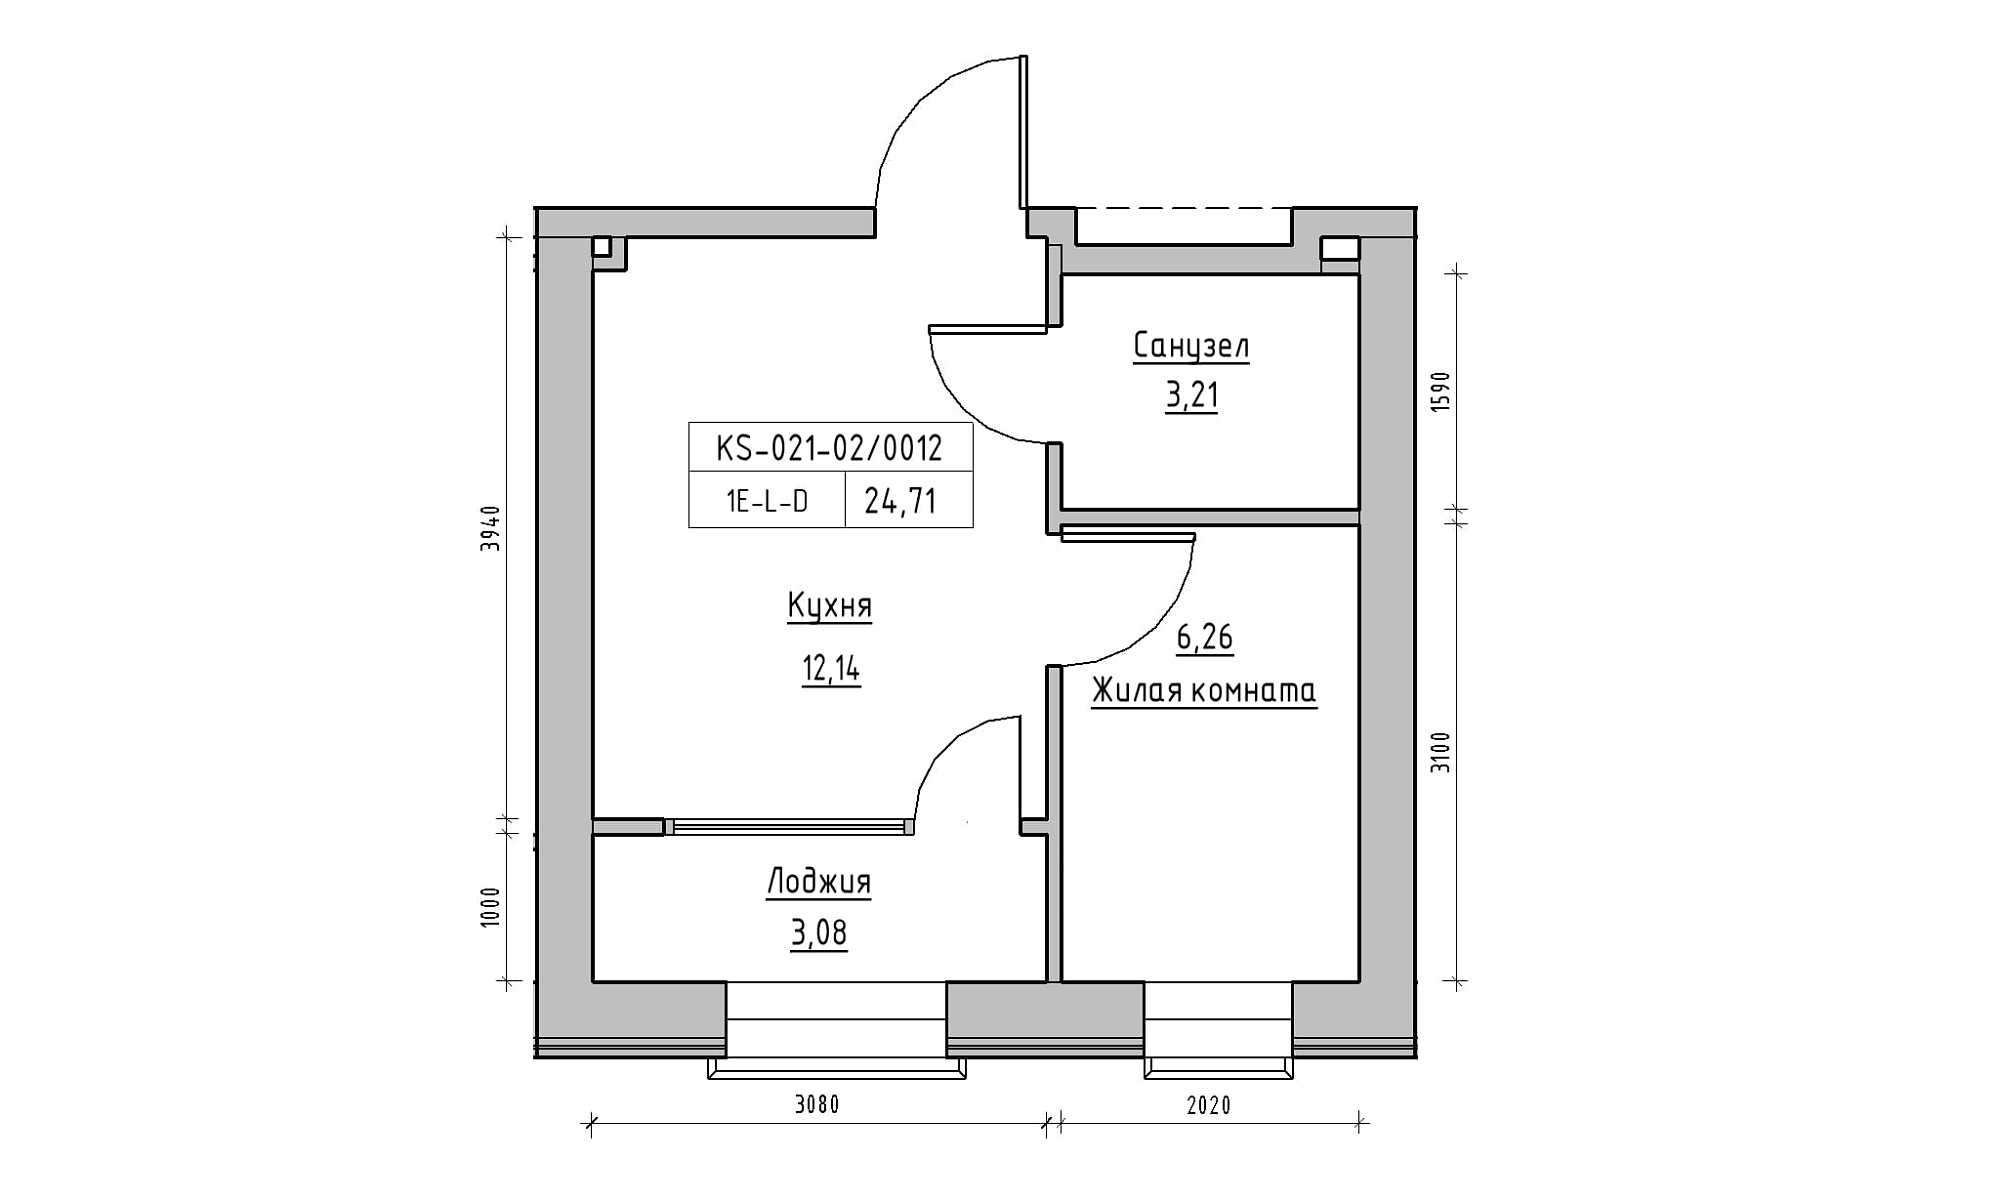 Planning 1-rm flats area 24.71m2, KS-021-02/0012.